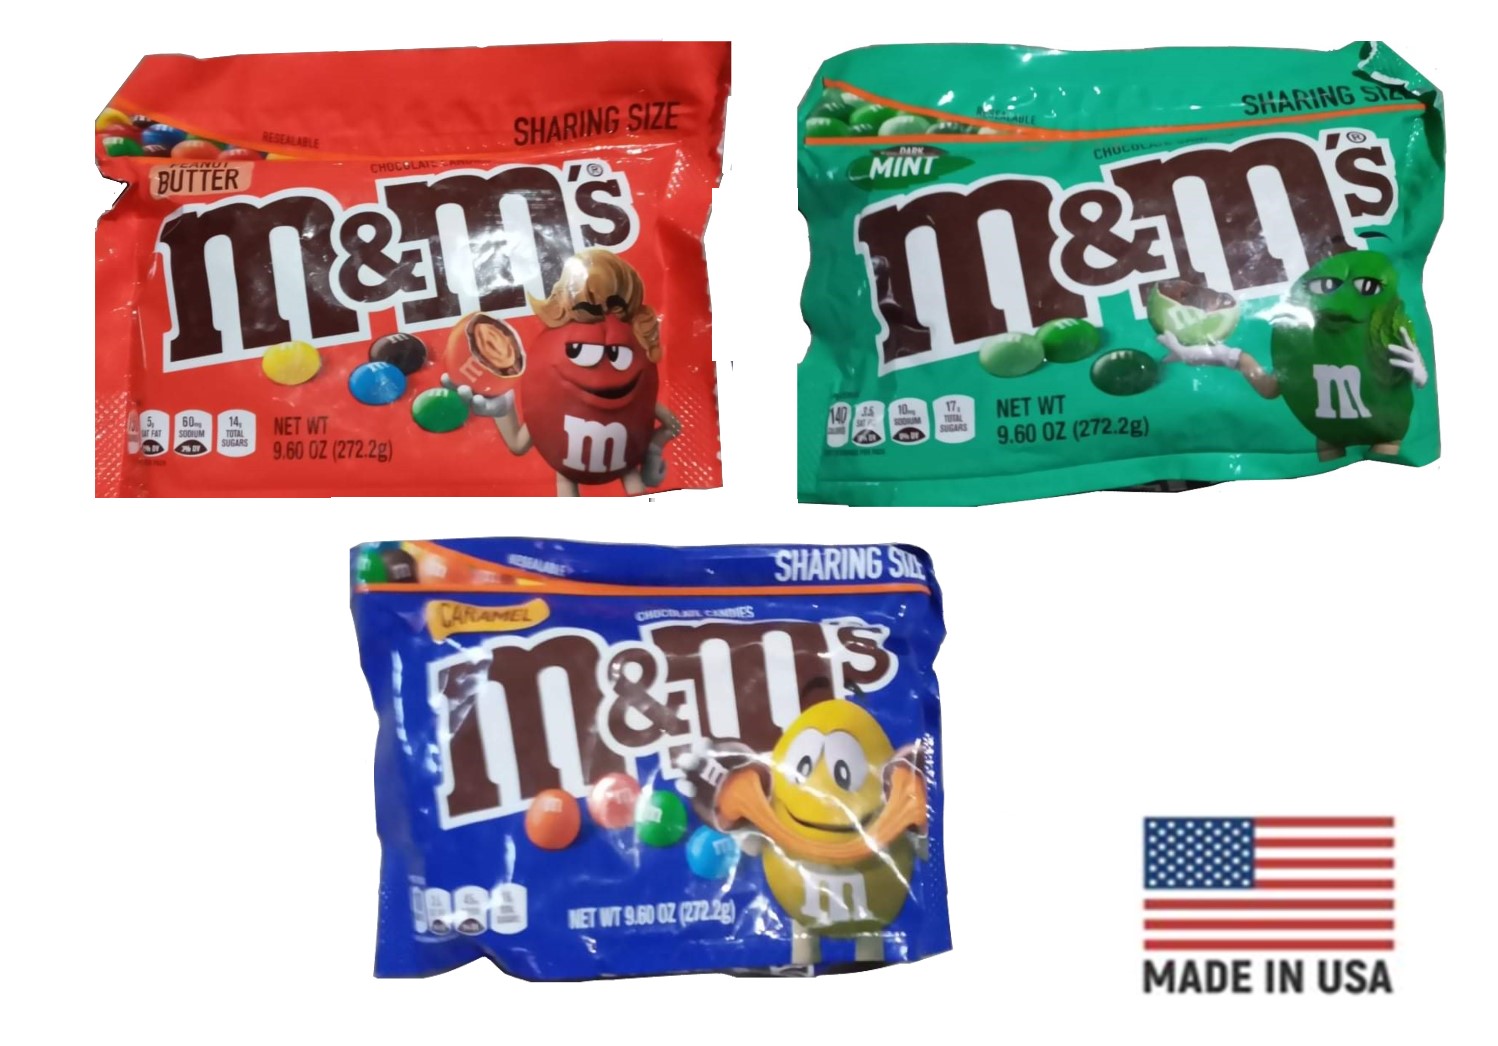 M&M's Caramel Milk Chocolate Candy, Sharing Size - 9.6 oz Bag